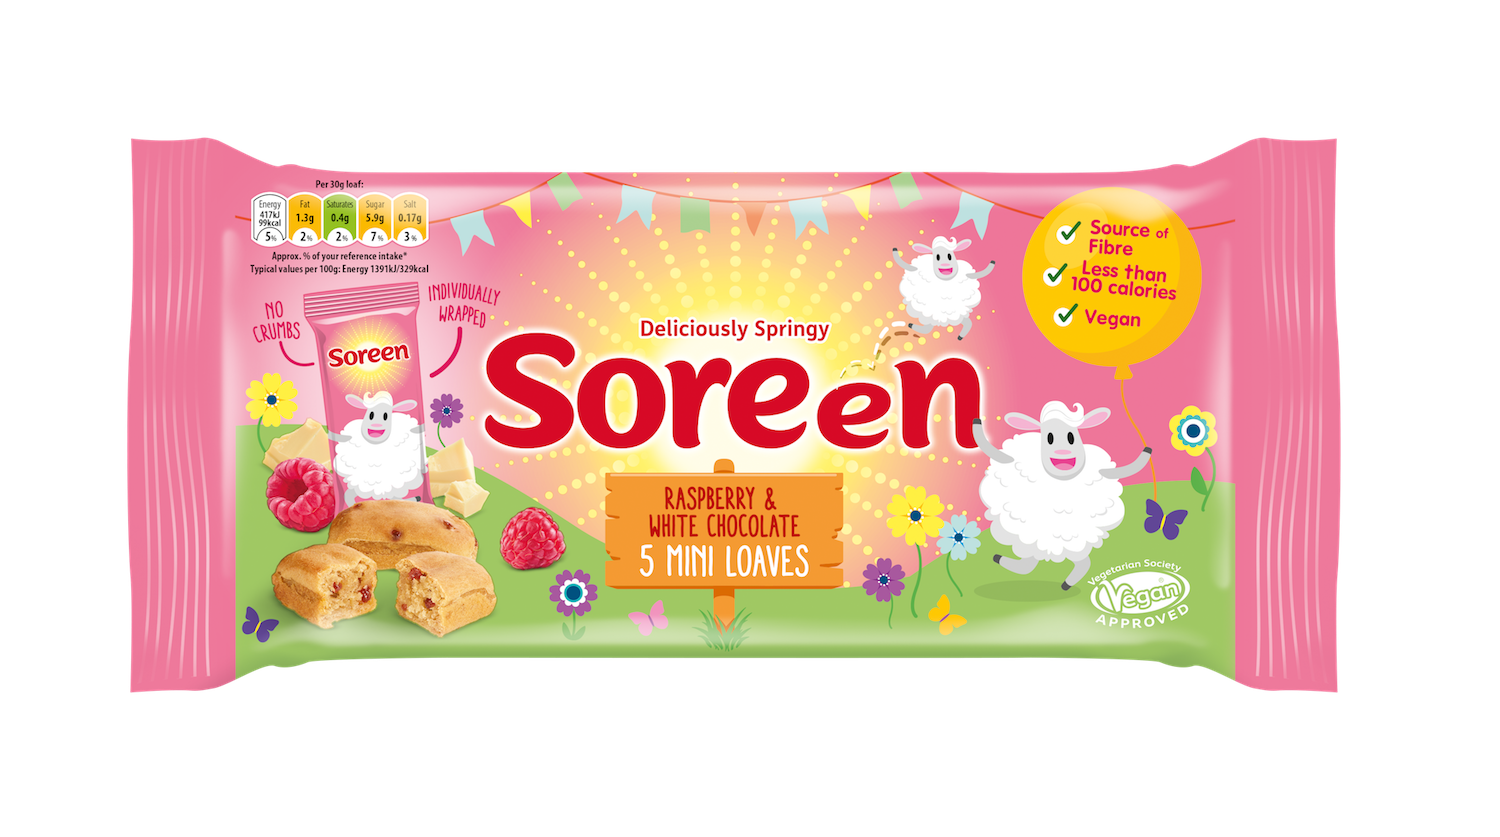 New – Soreen vegan-friendly Mini Loaves